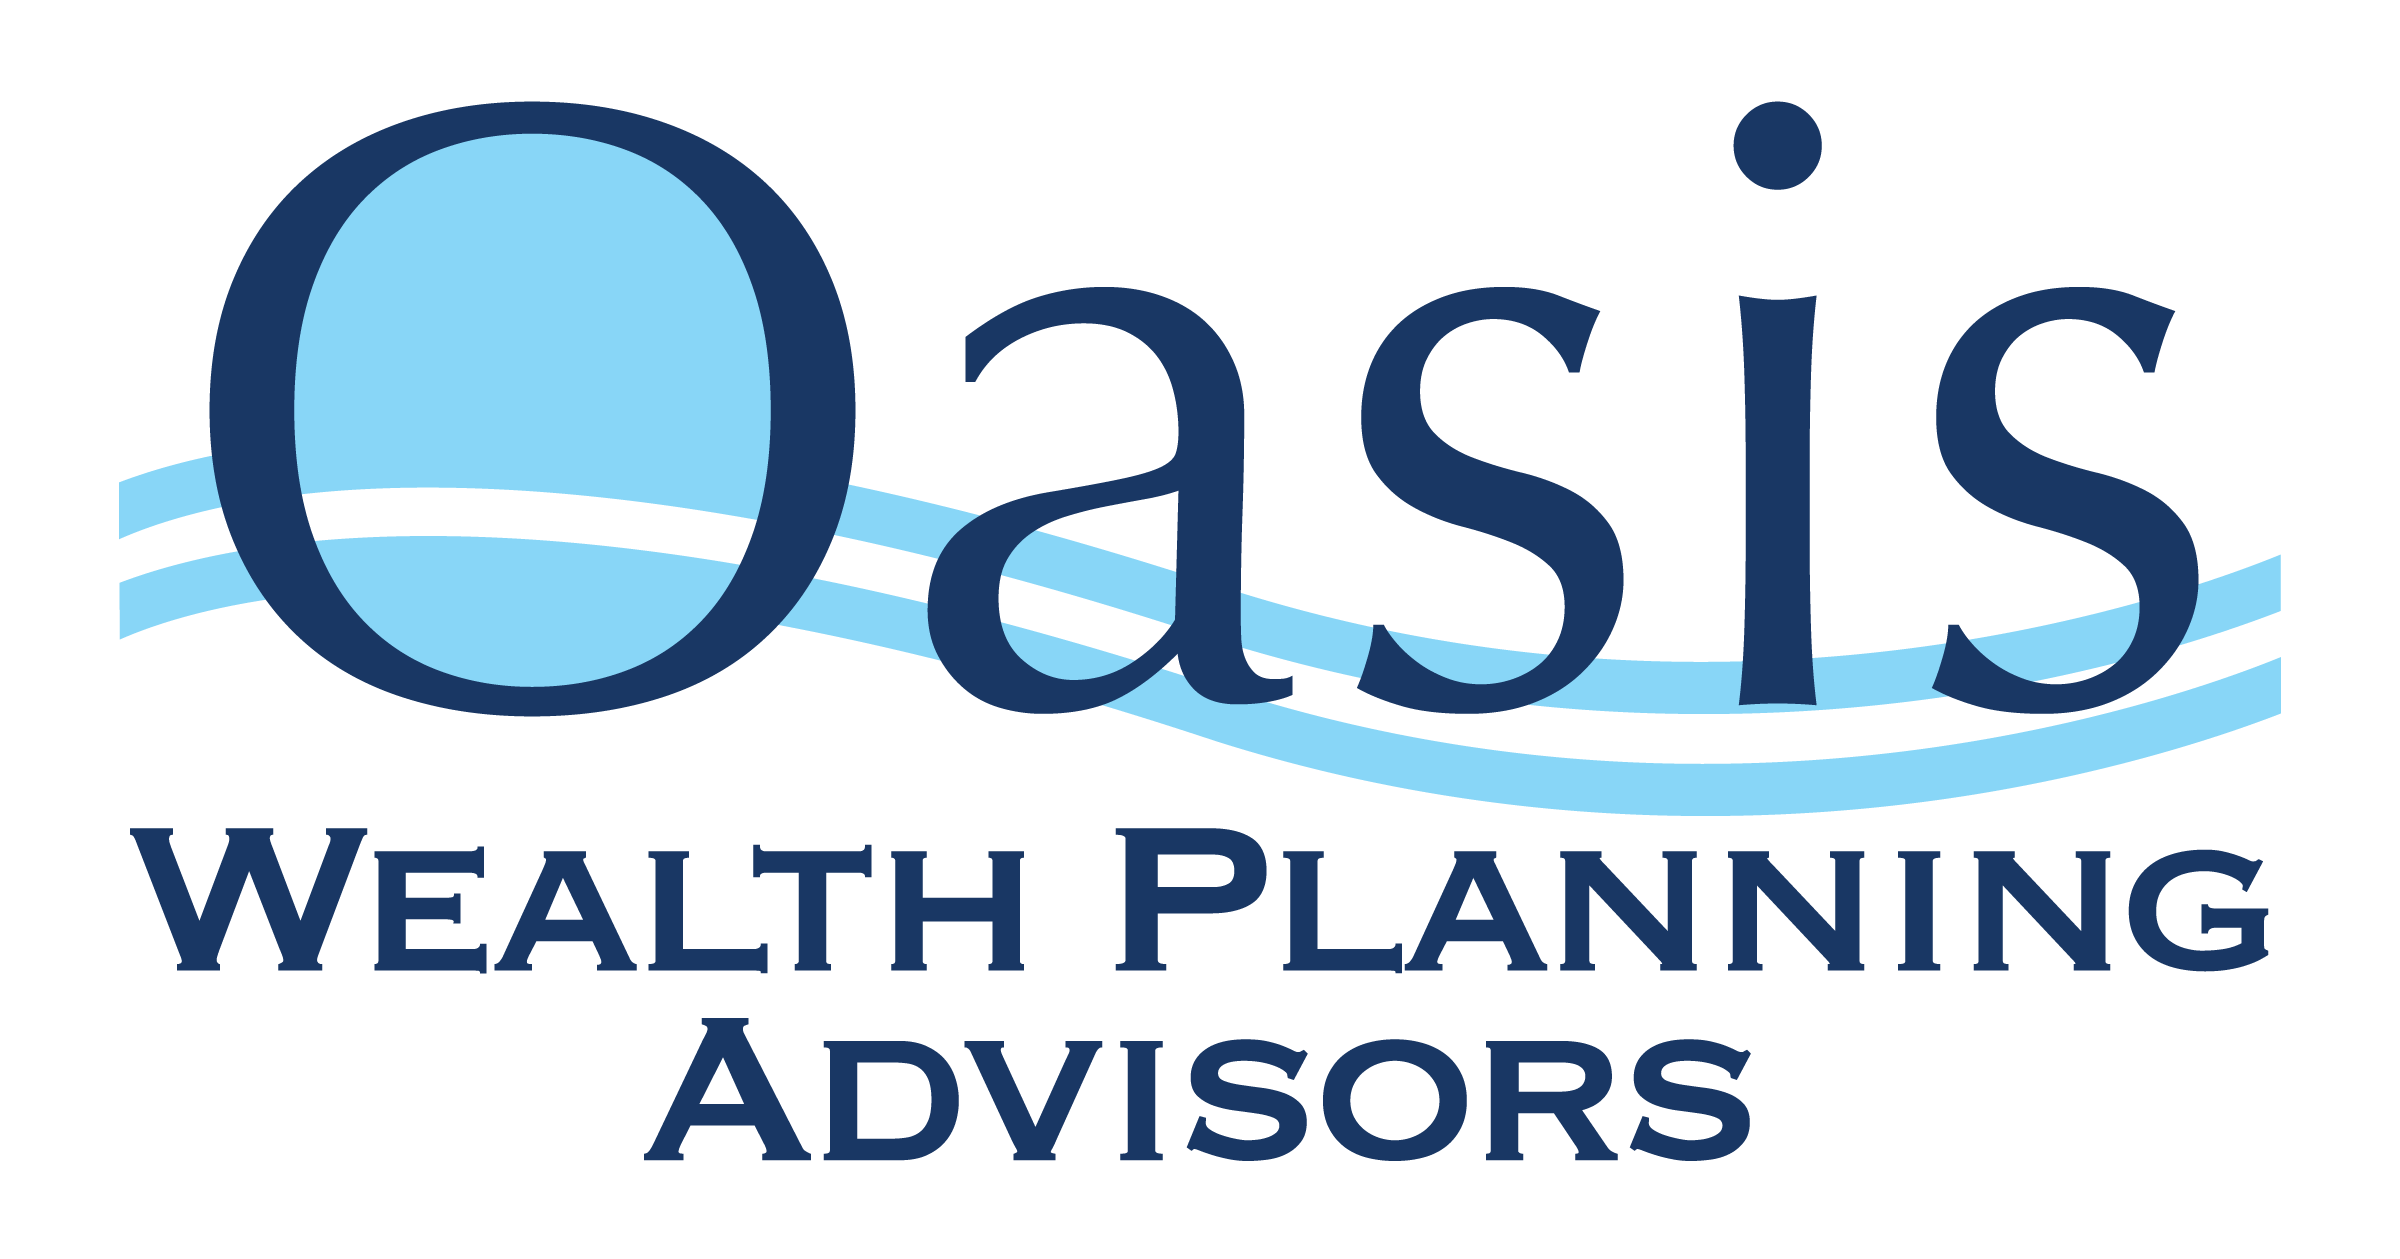 Oasis Wealth Planning Advisors